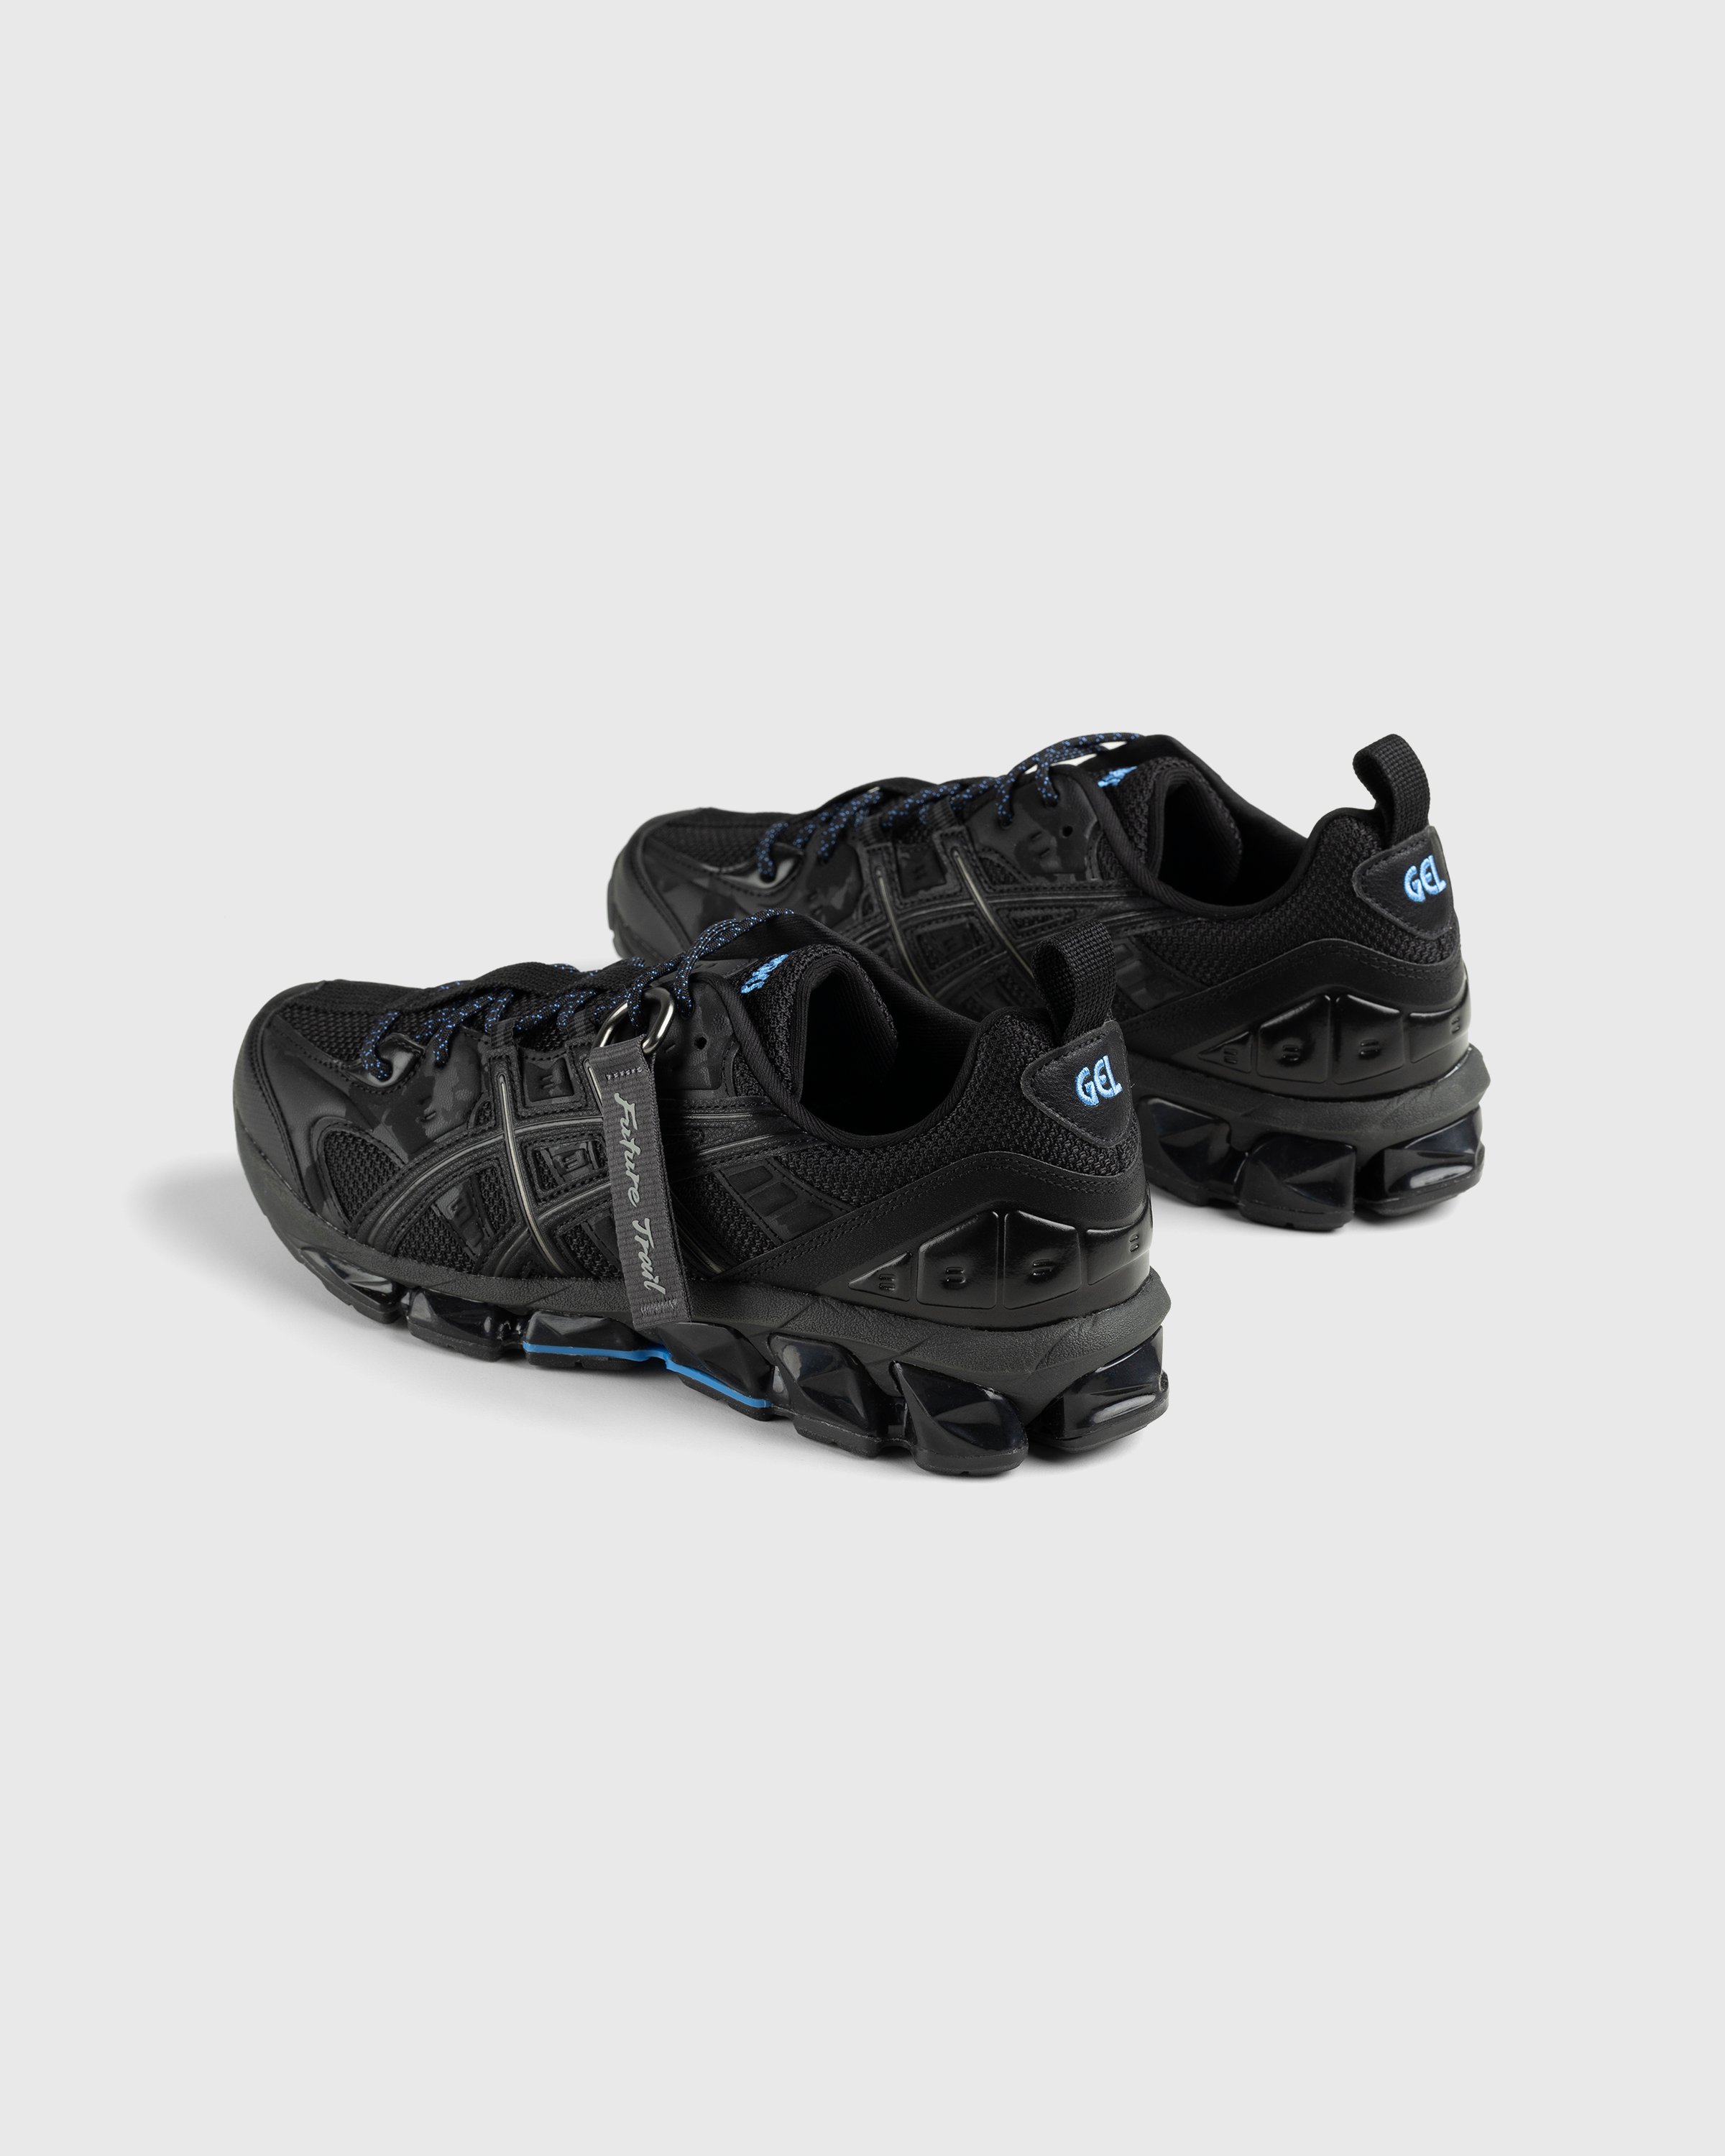 asics - GEL-QUANTUM 360 VII KISO Black - Footwear - Black - Image 4